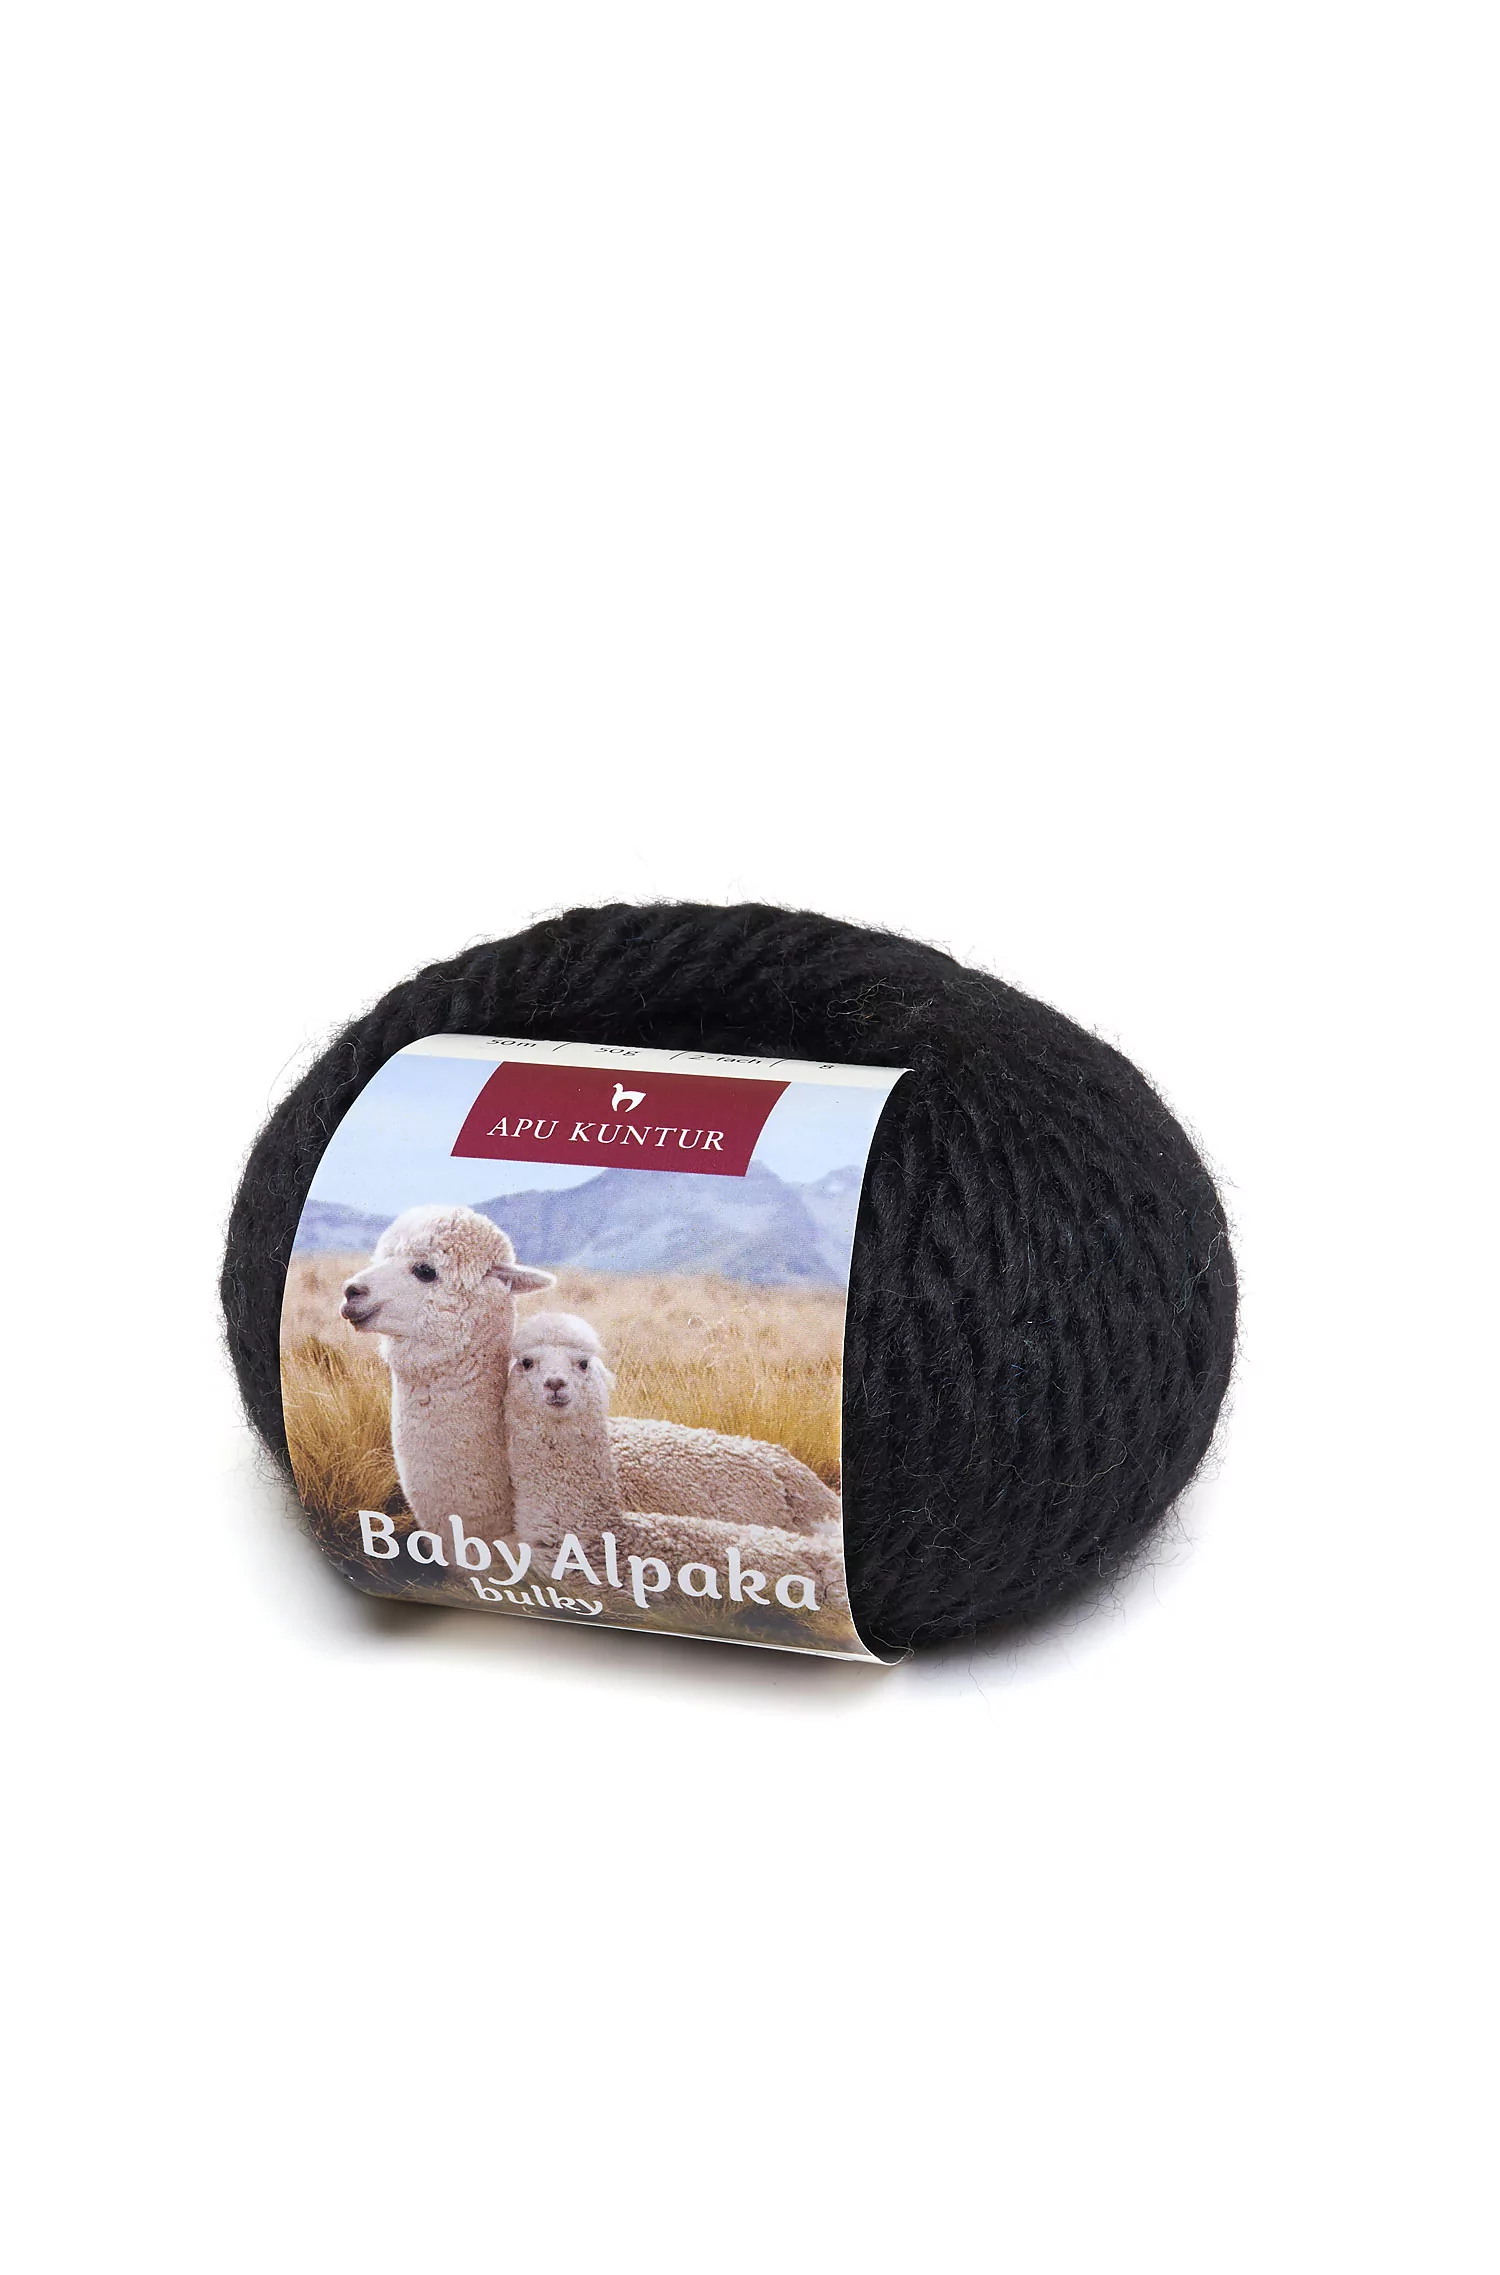 Alpaca wool BULKY, 50g